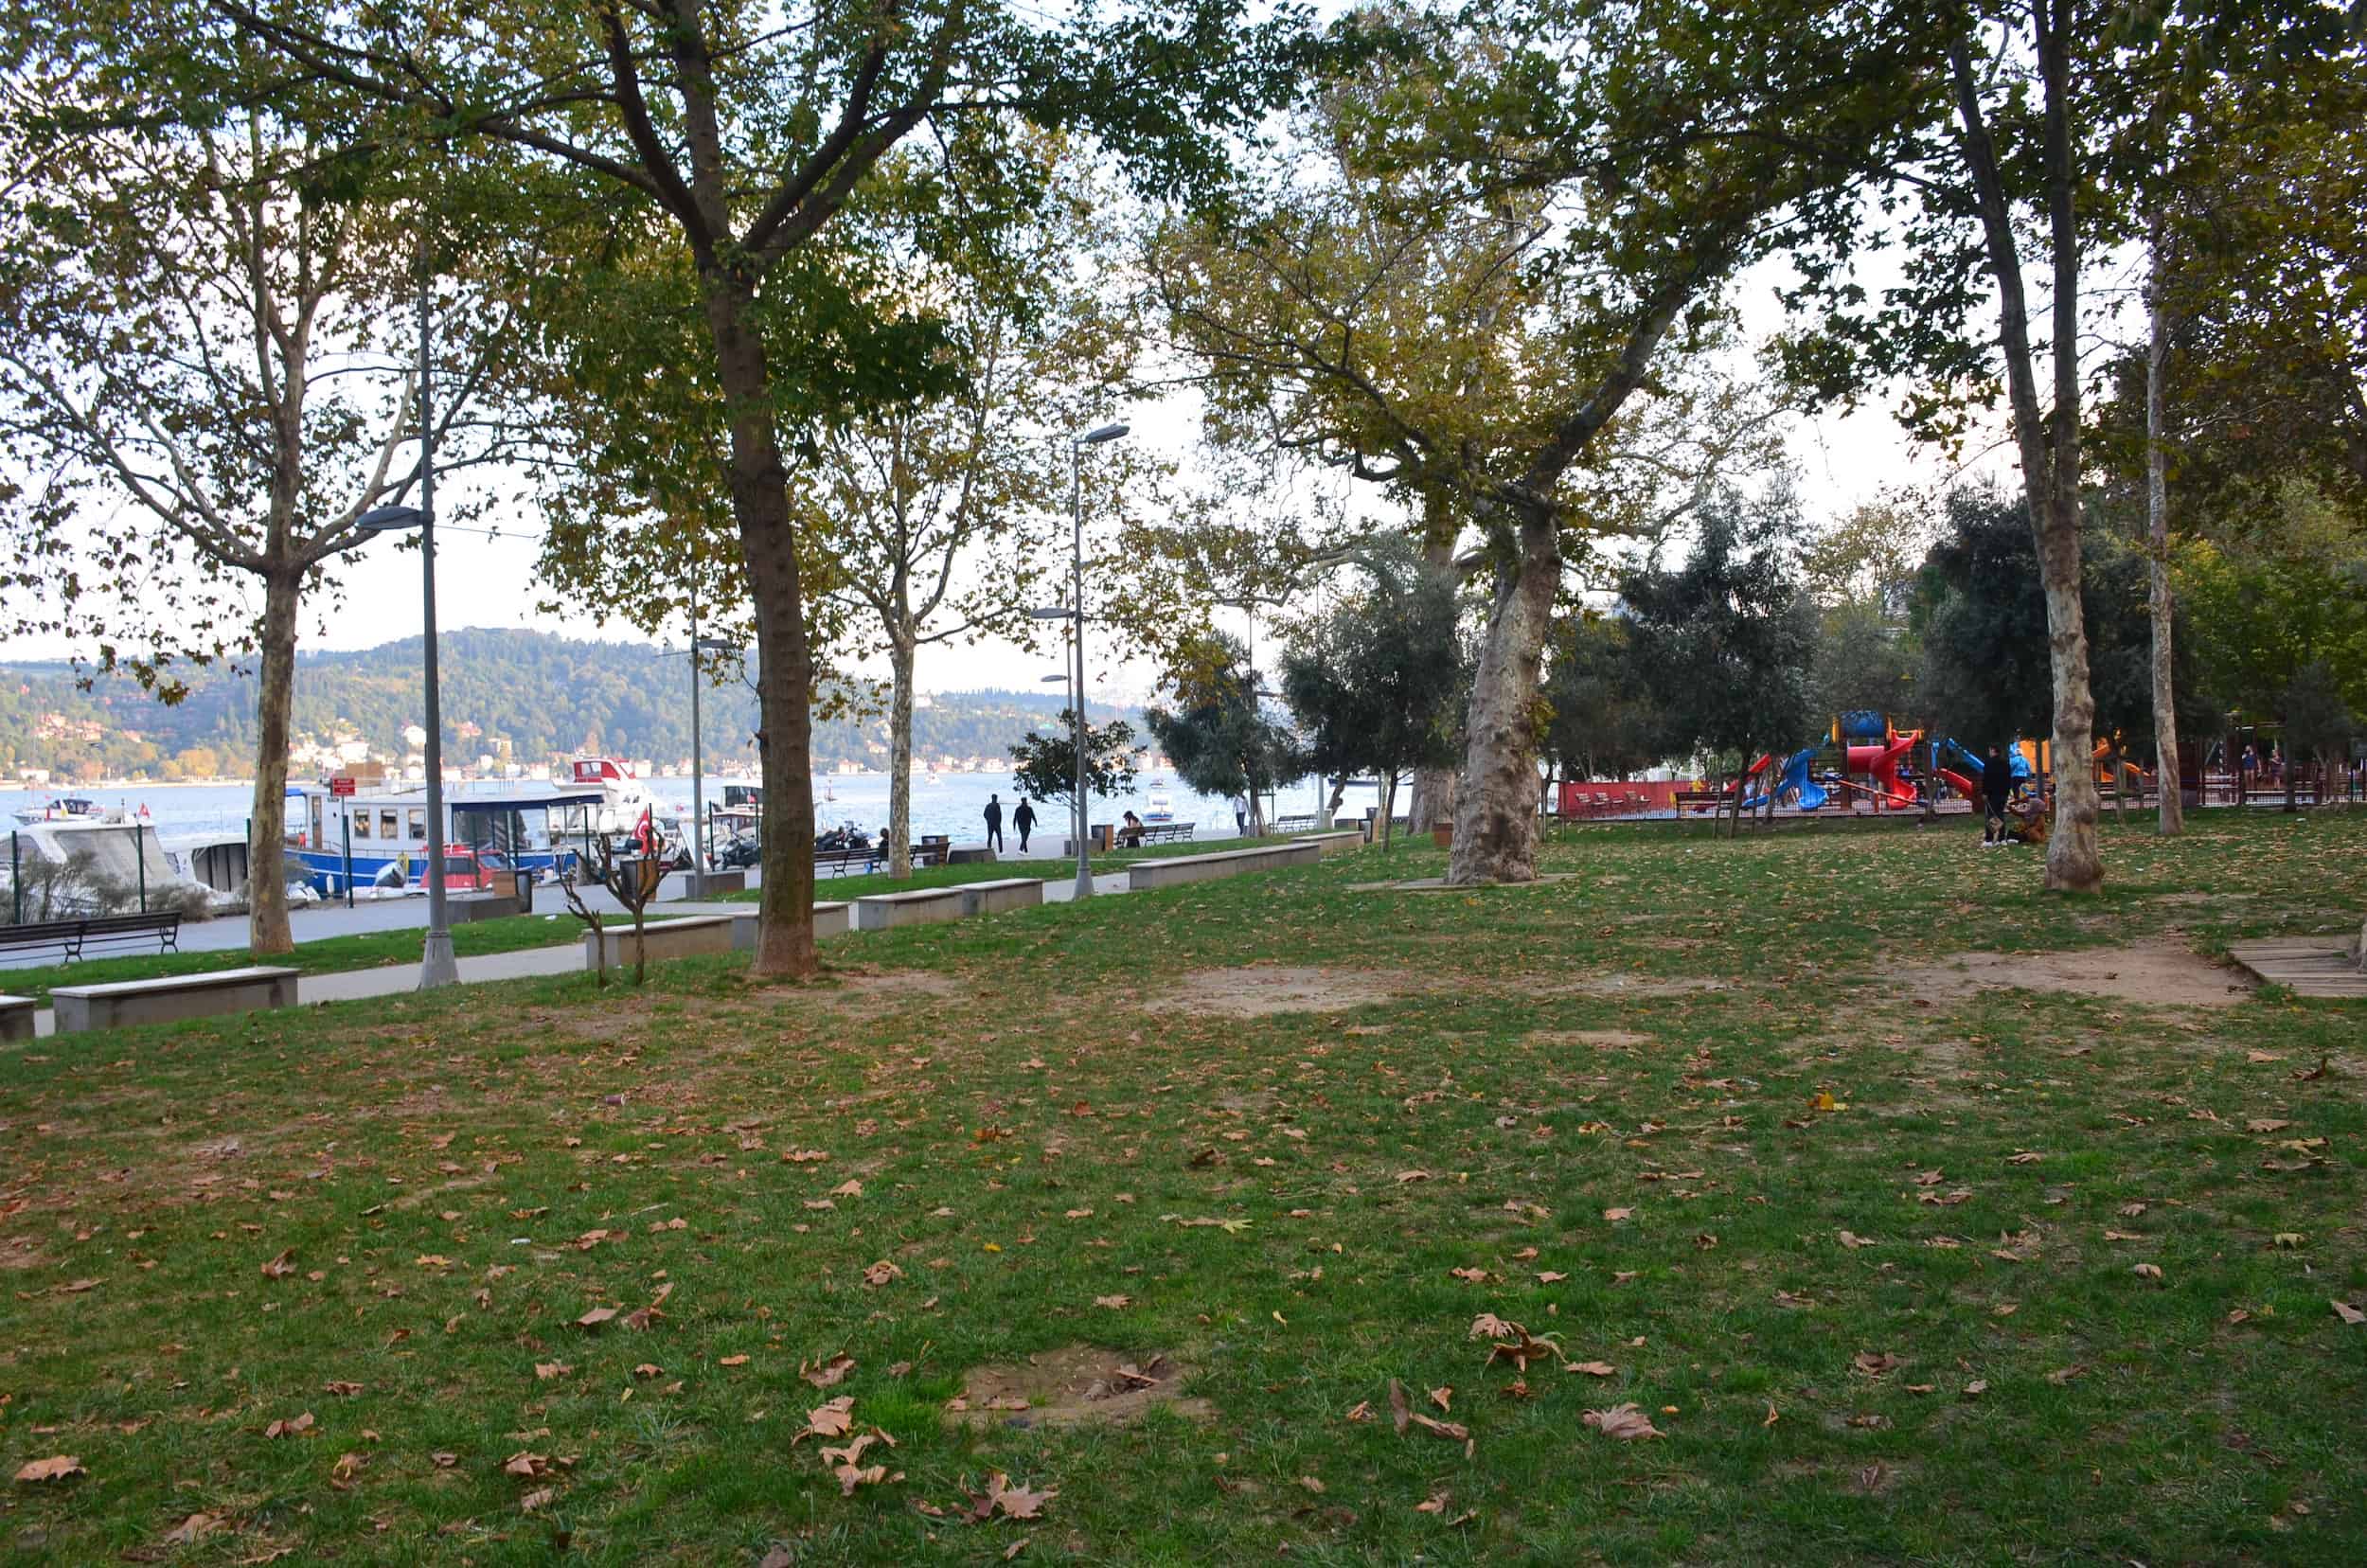 Bebek Park in Bebek, Istanbul, Turkey